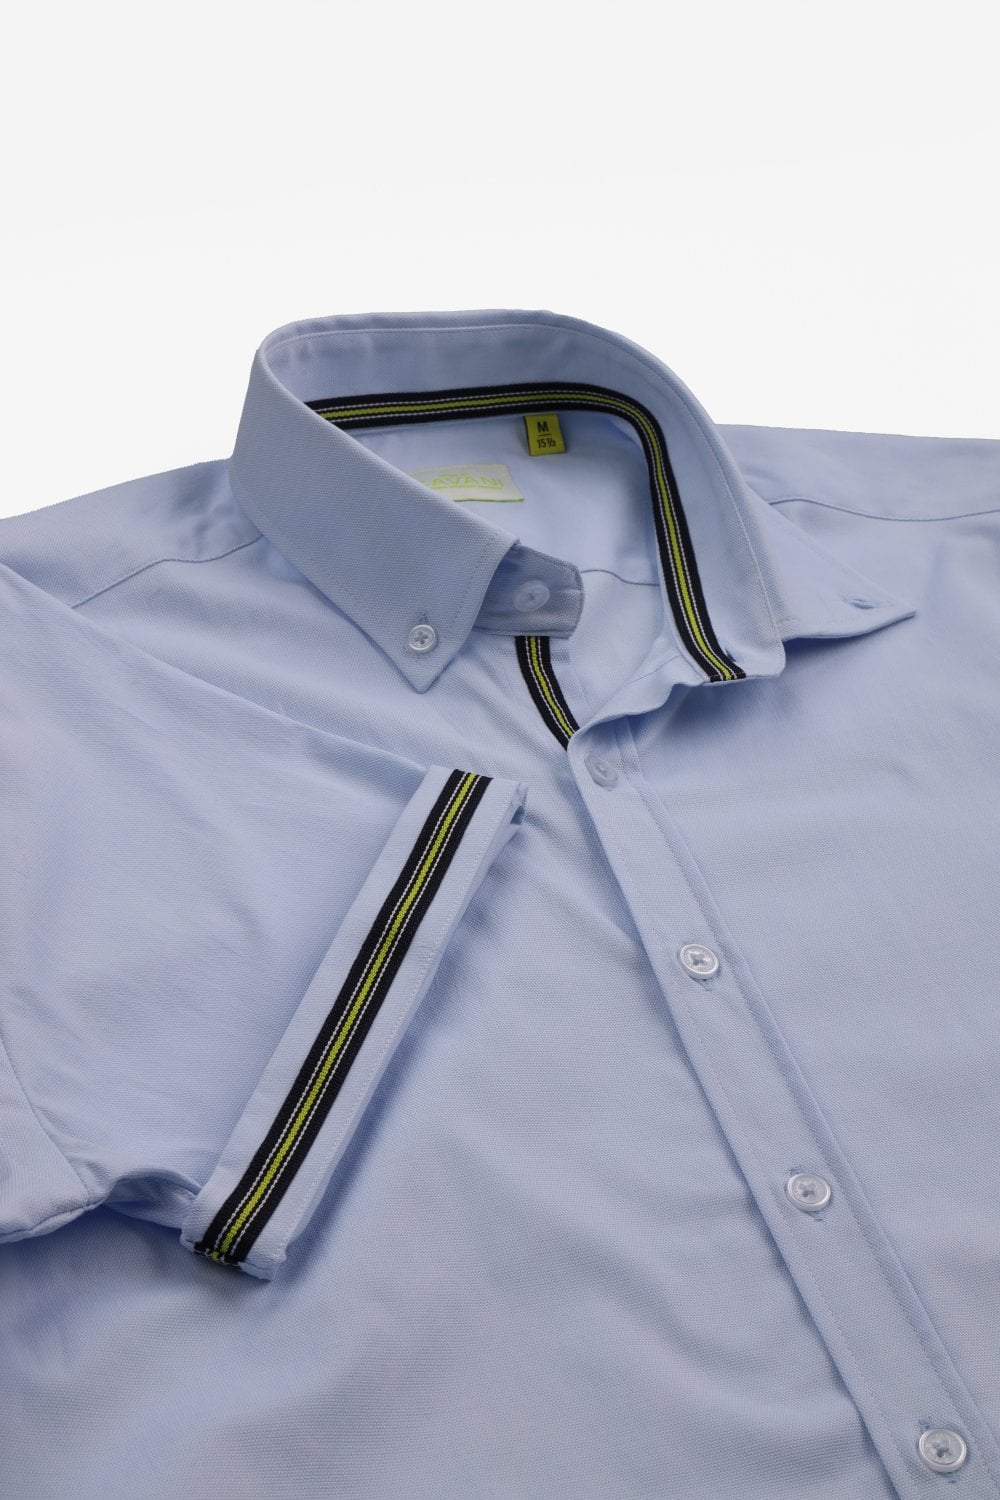 Vito Sky Blue Short Sleeve Shirt - Shirts - S - THREADPEPPER